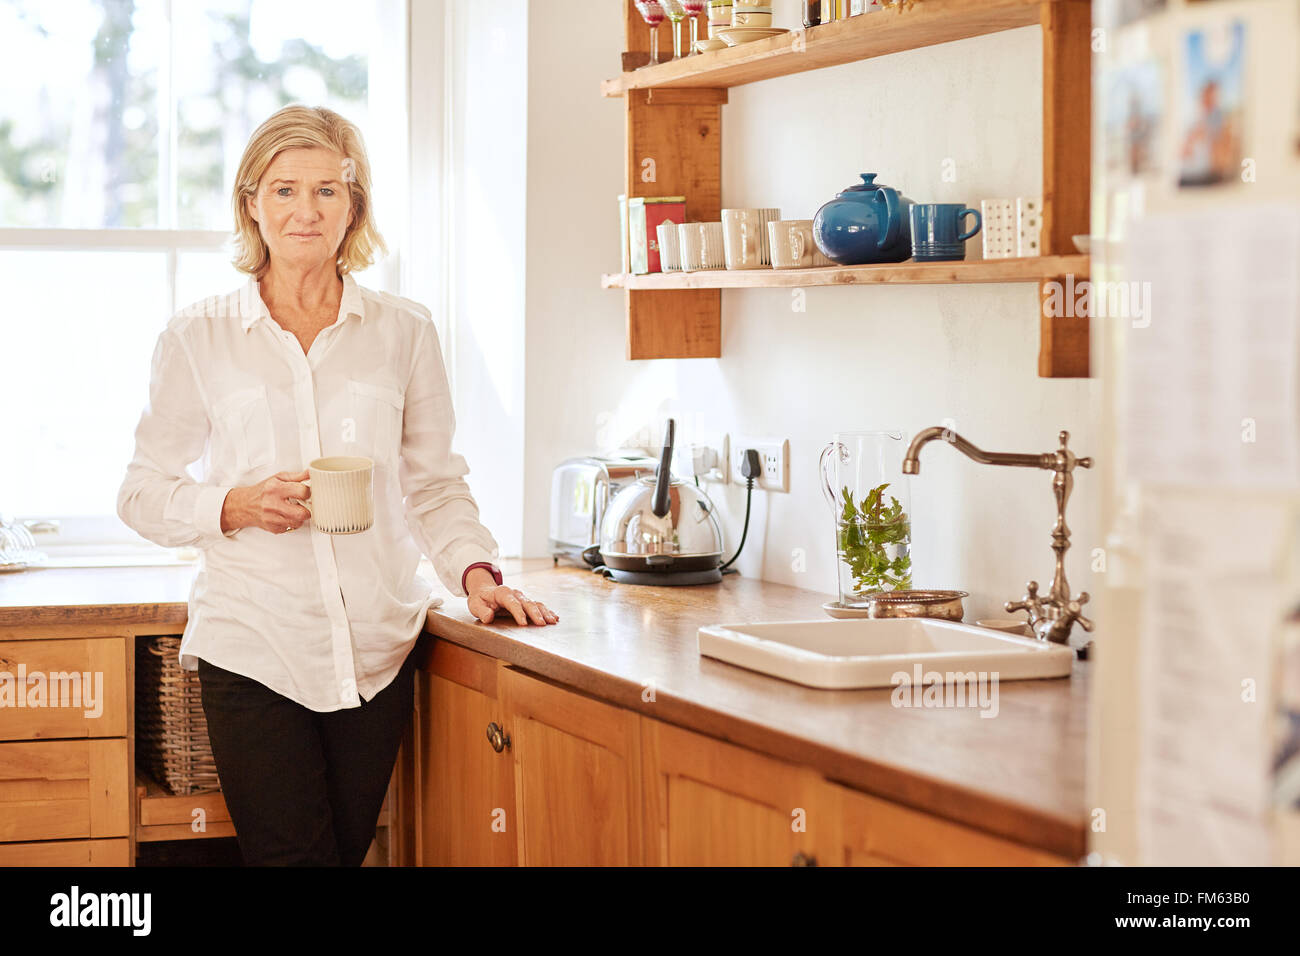 Worried looking senior woman standing in her kitchen Stock Photo